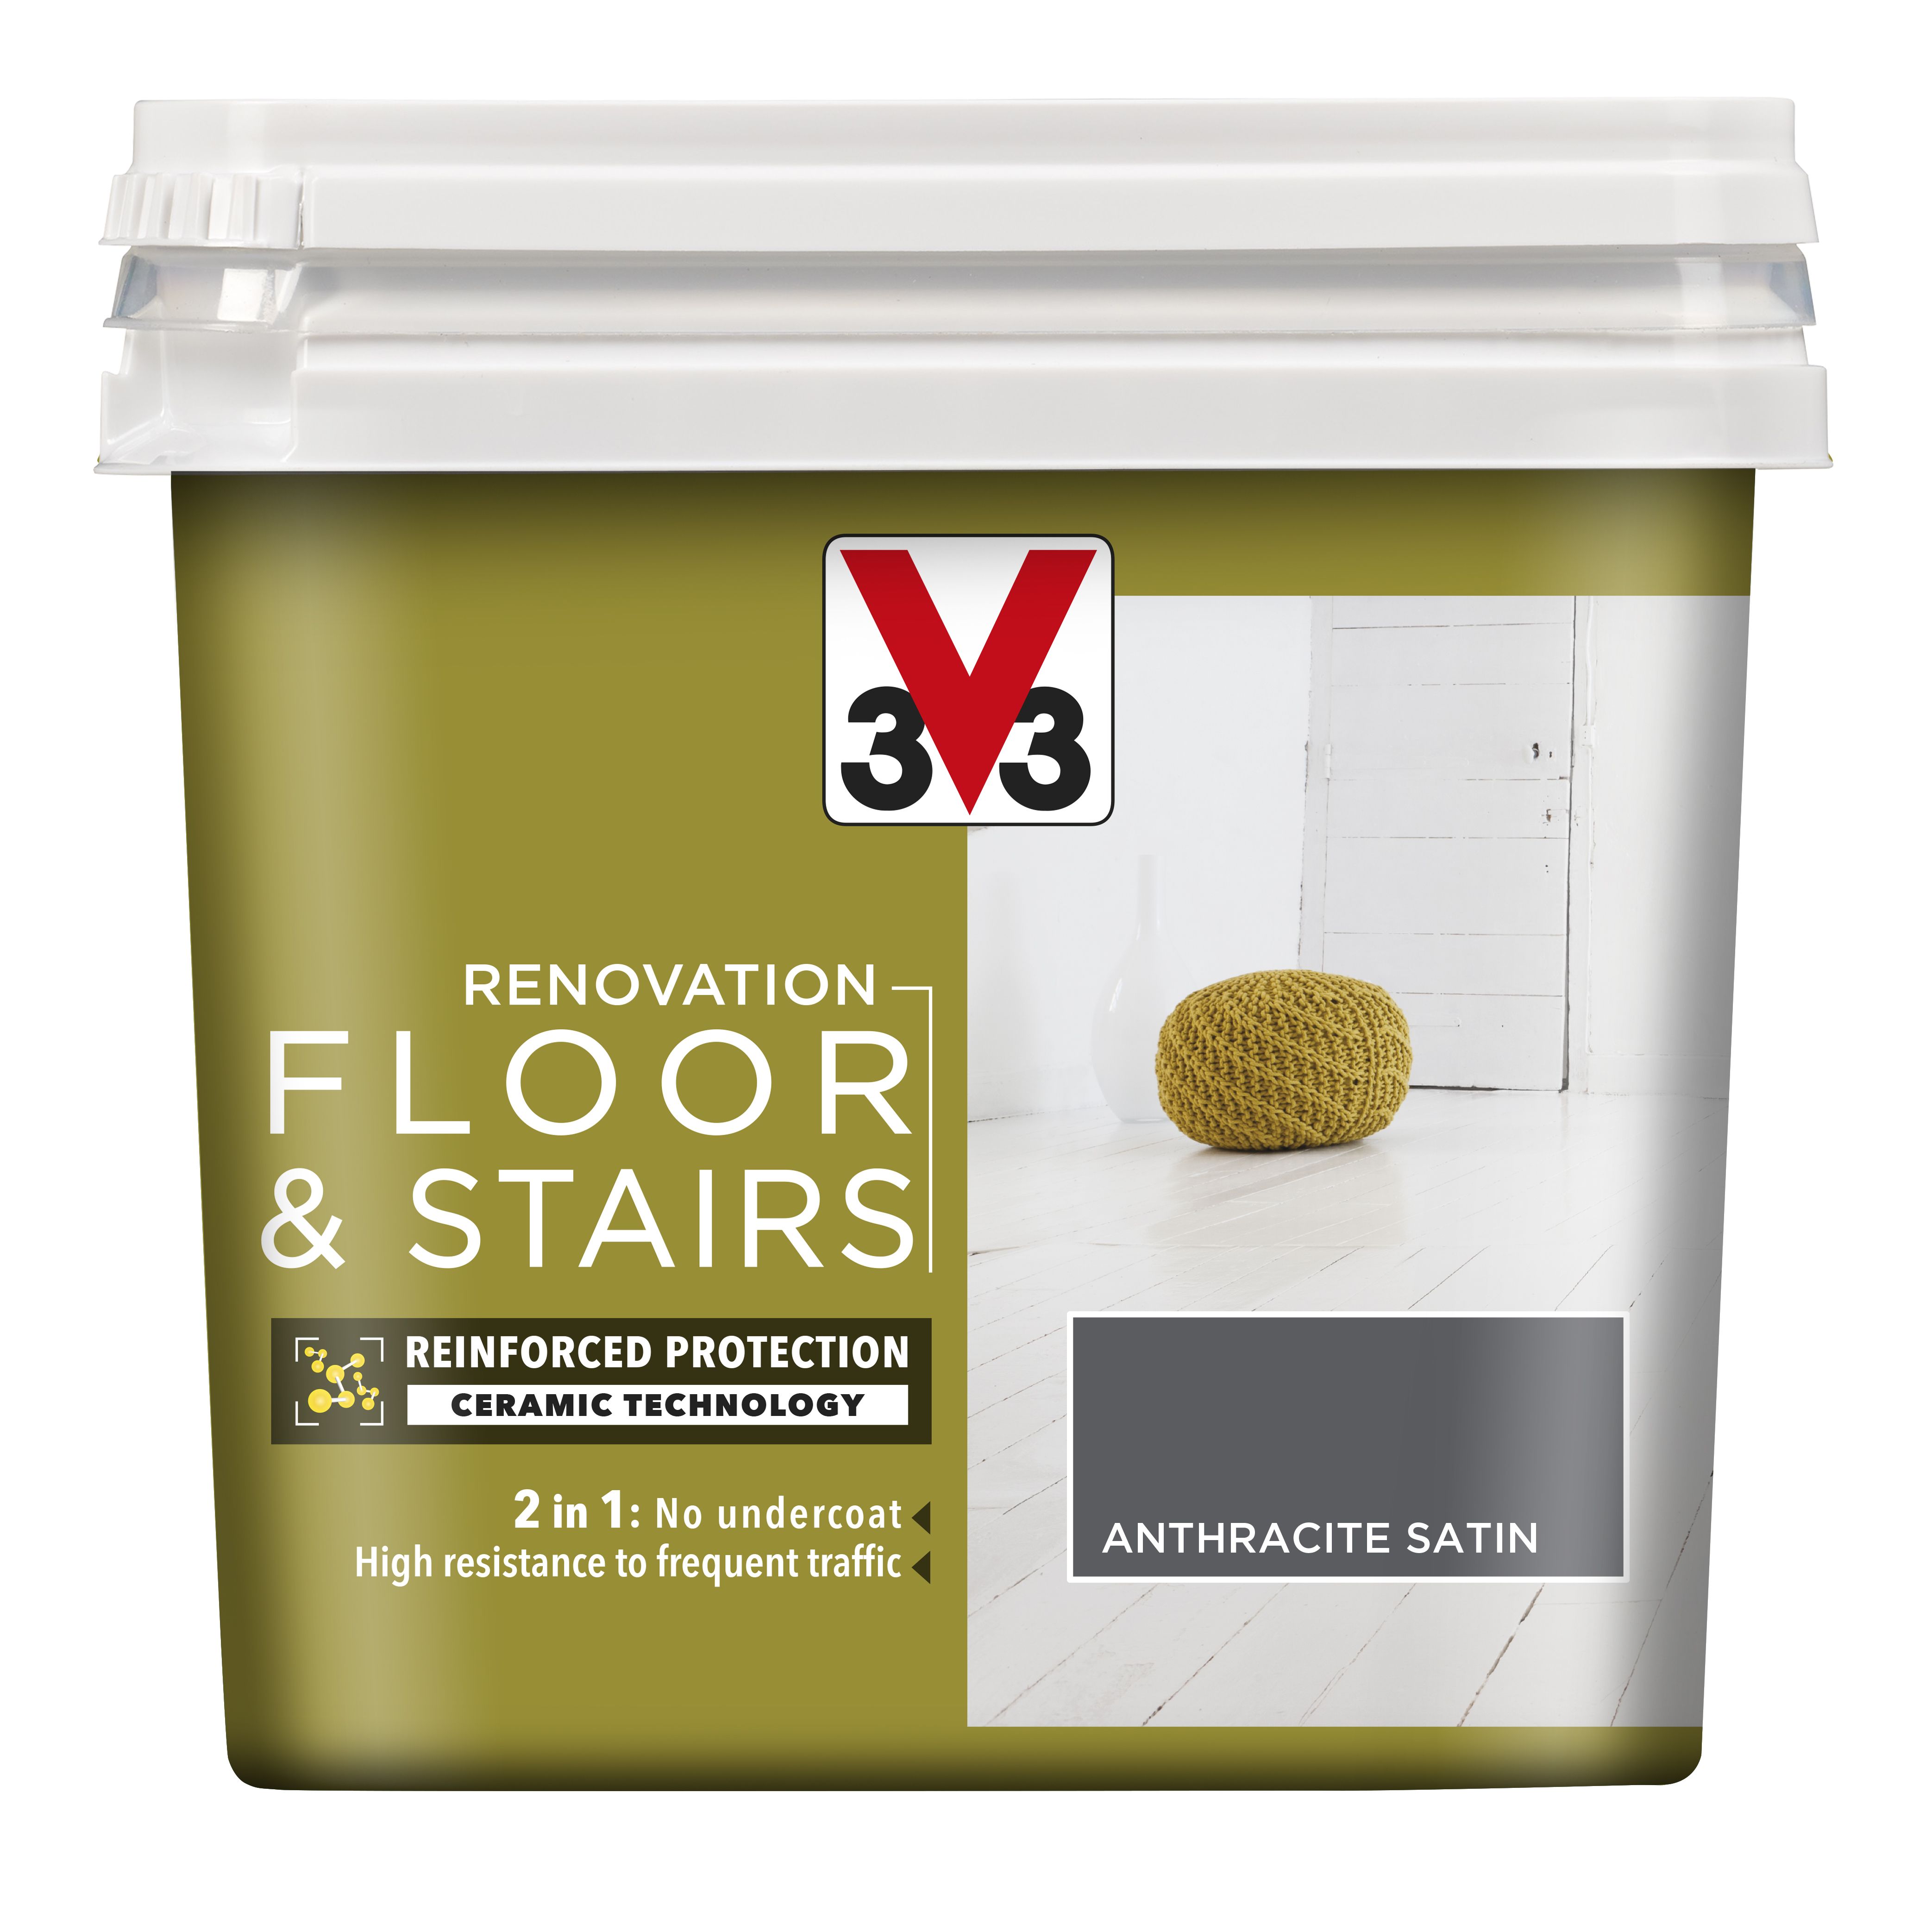 V33 Renovation Anthracite Satinwood Floor & Stair Paint, 750Ml